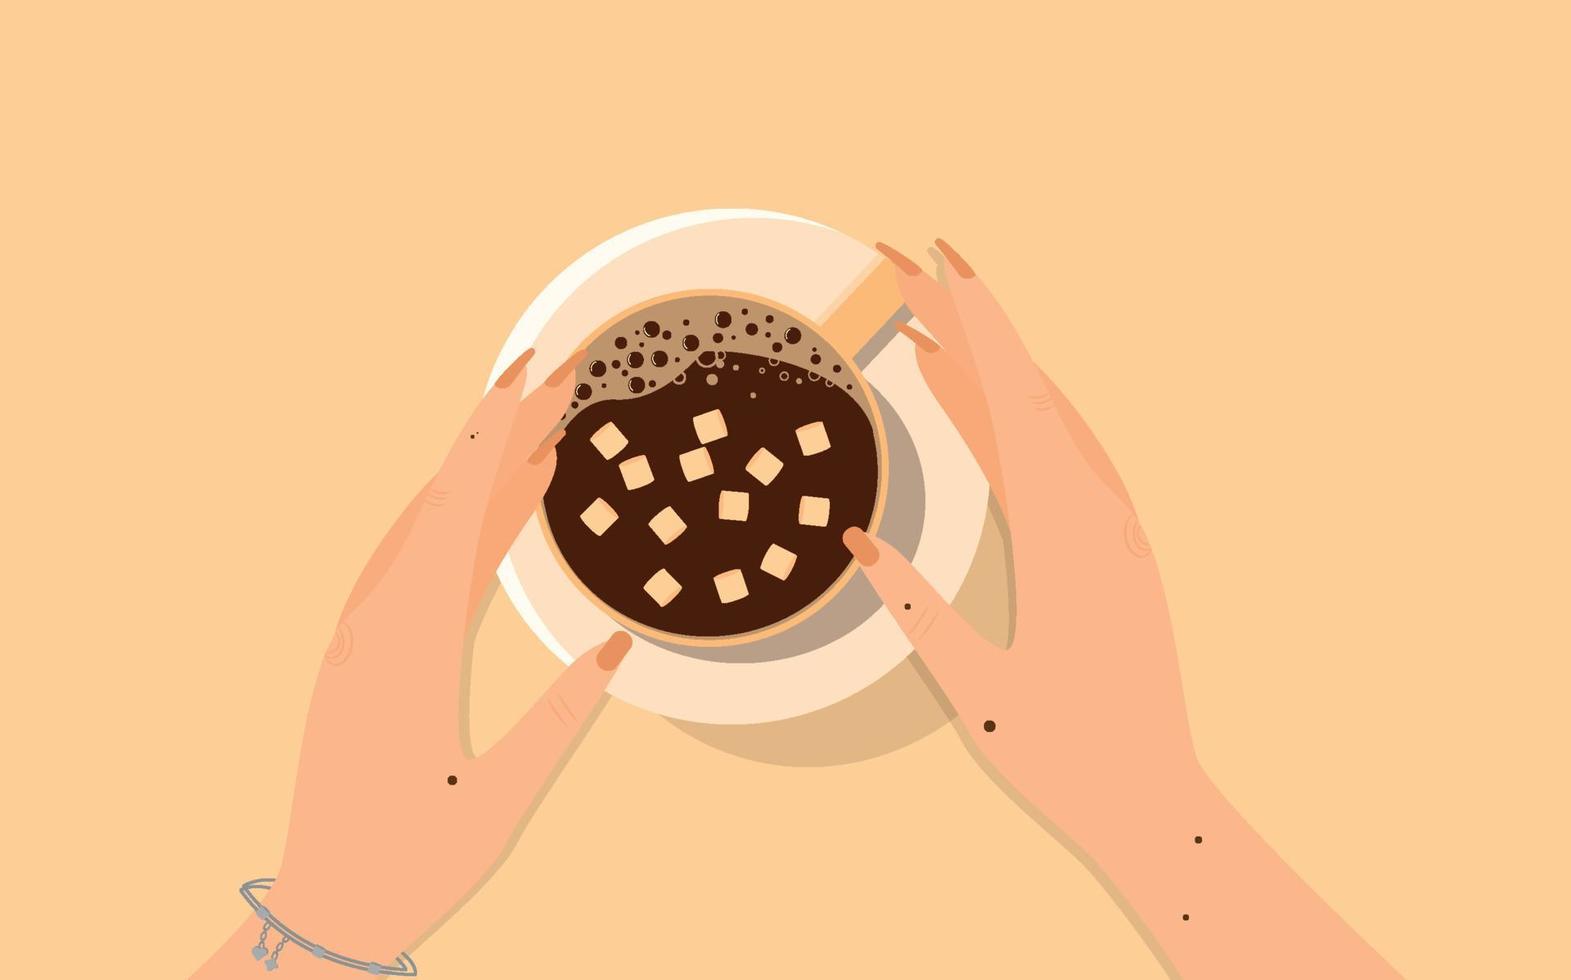 koffiepauze kopje koffie marshmallow meisje handen warme drank bovenaanzicht. vector illustratie